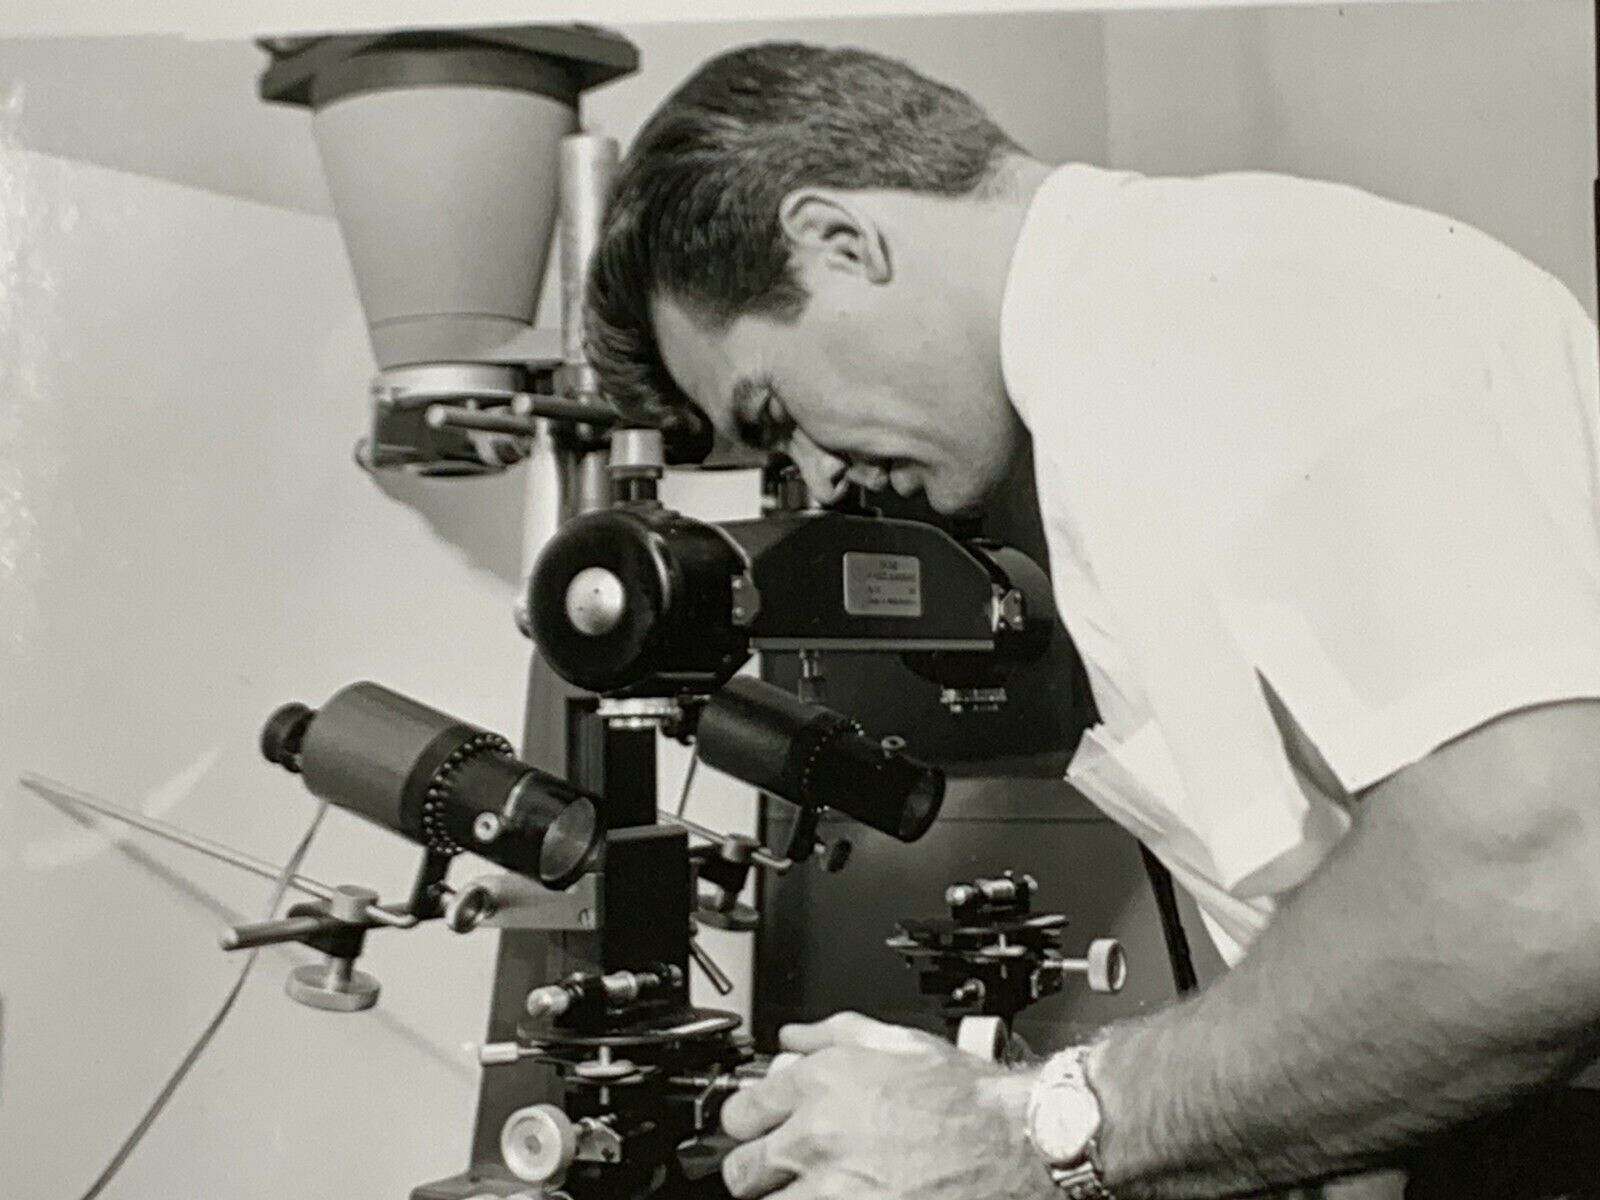 Bm) Found Photograph Artistic Handsome Man Looking Through Big Microscope 